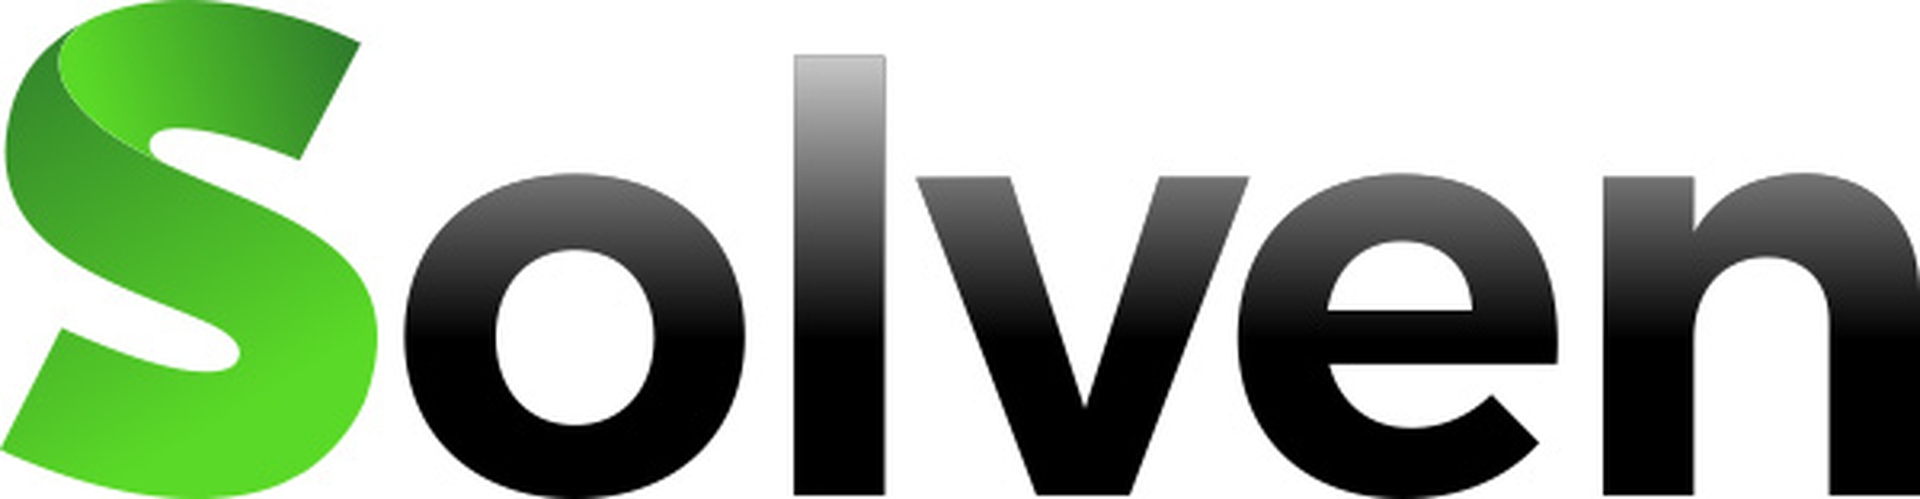 Solven  logo